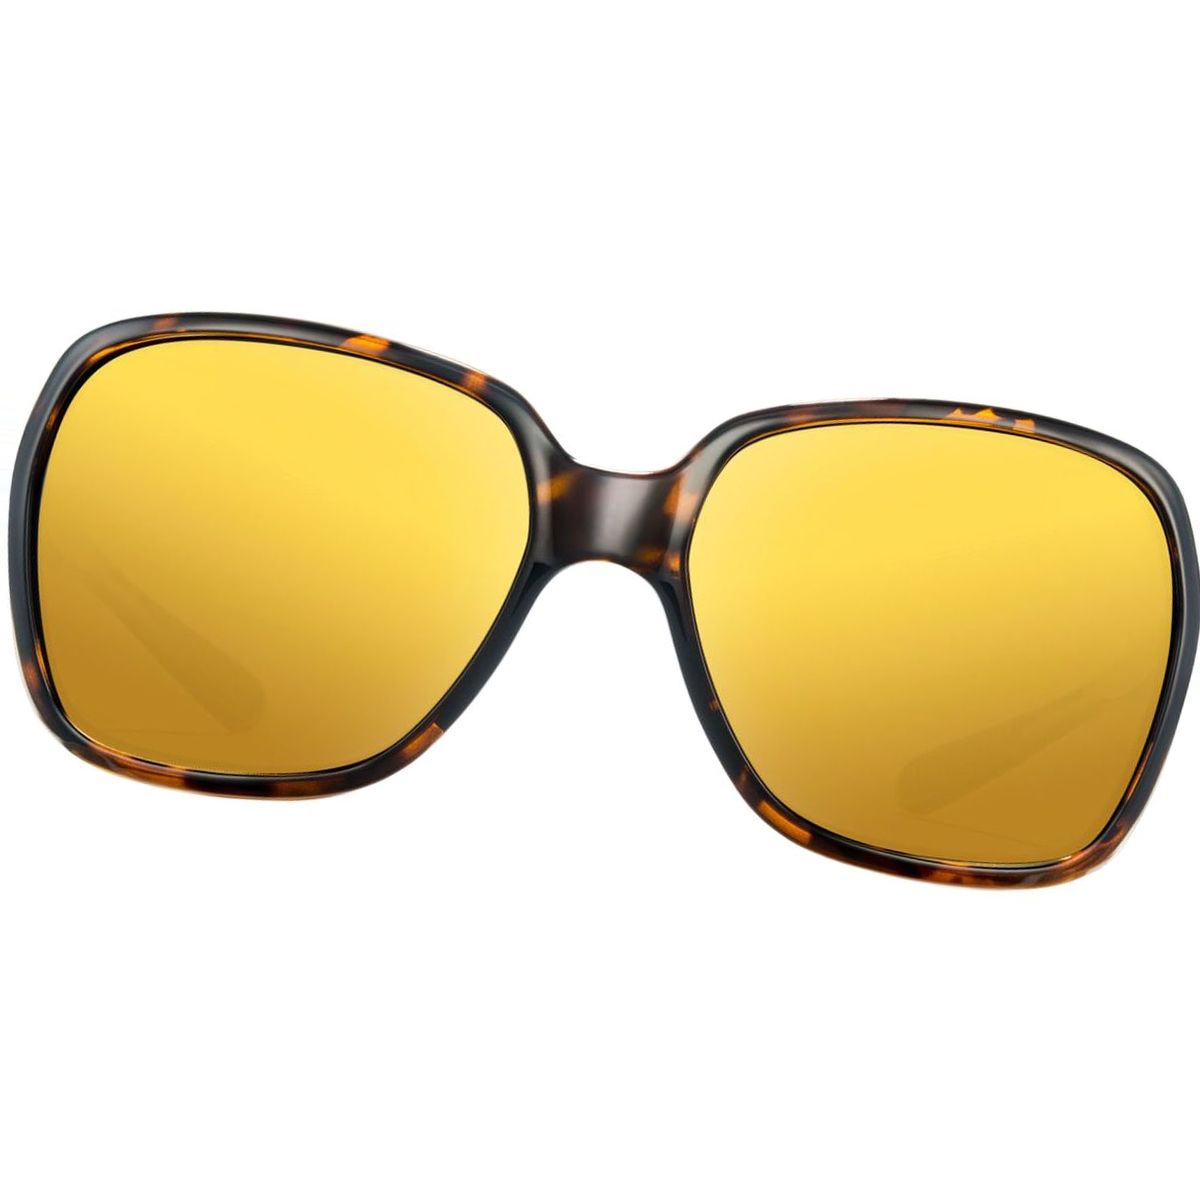 Roka Monaco Sunglasses - Women's